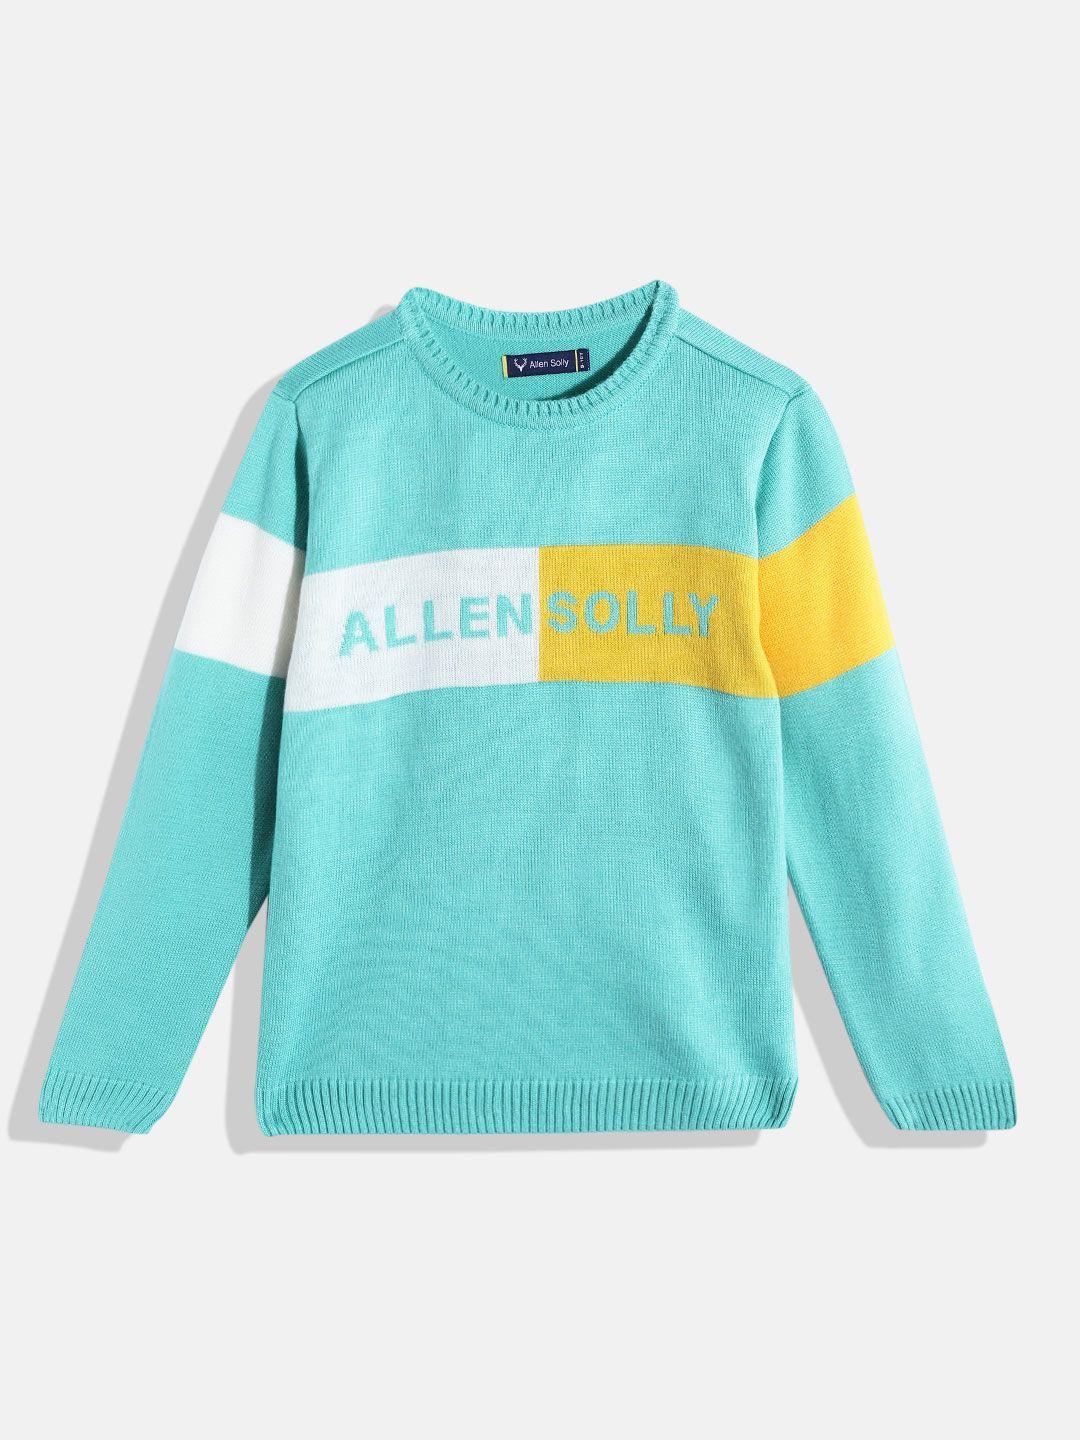 Allen Solly Junior Boys Turquoise Blue & Yellow Self Design Acrylic Pullover